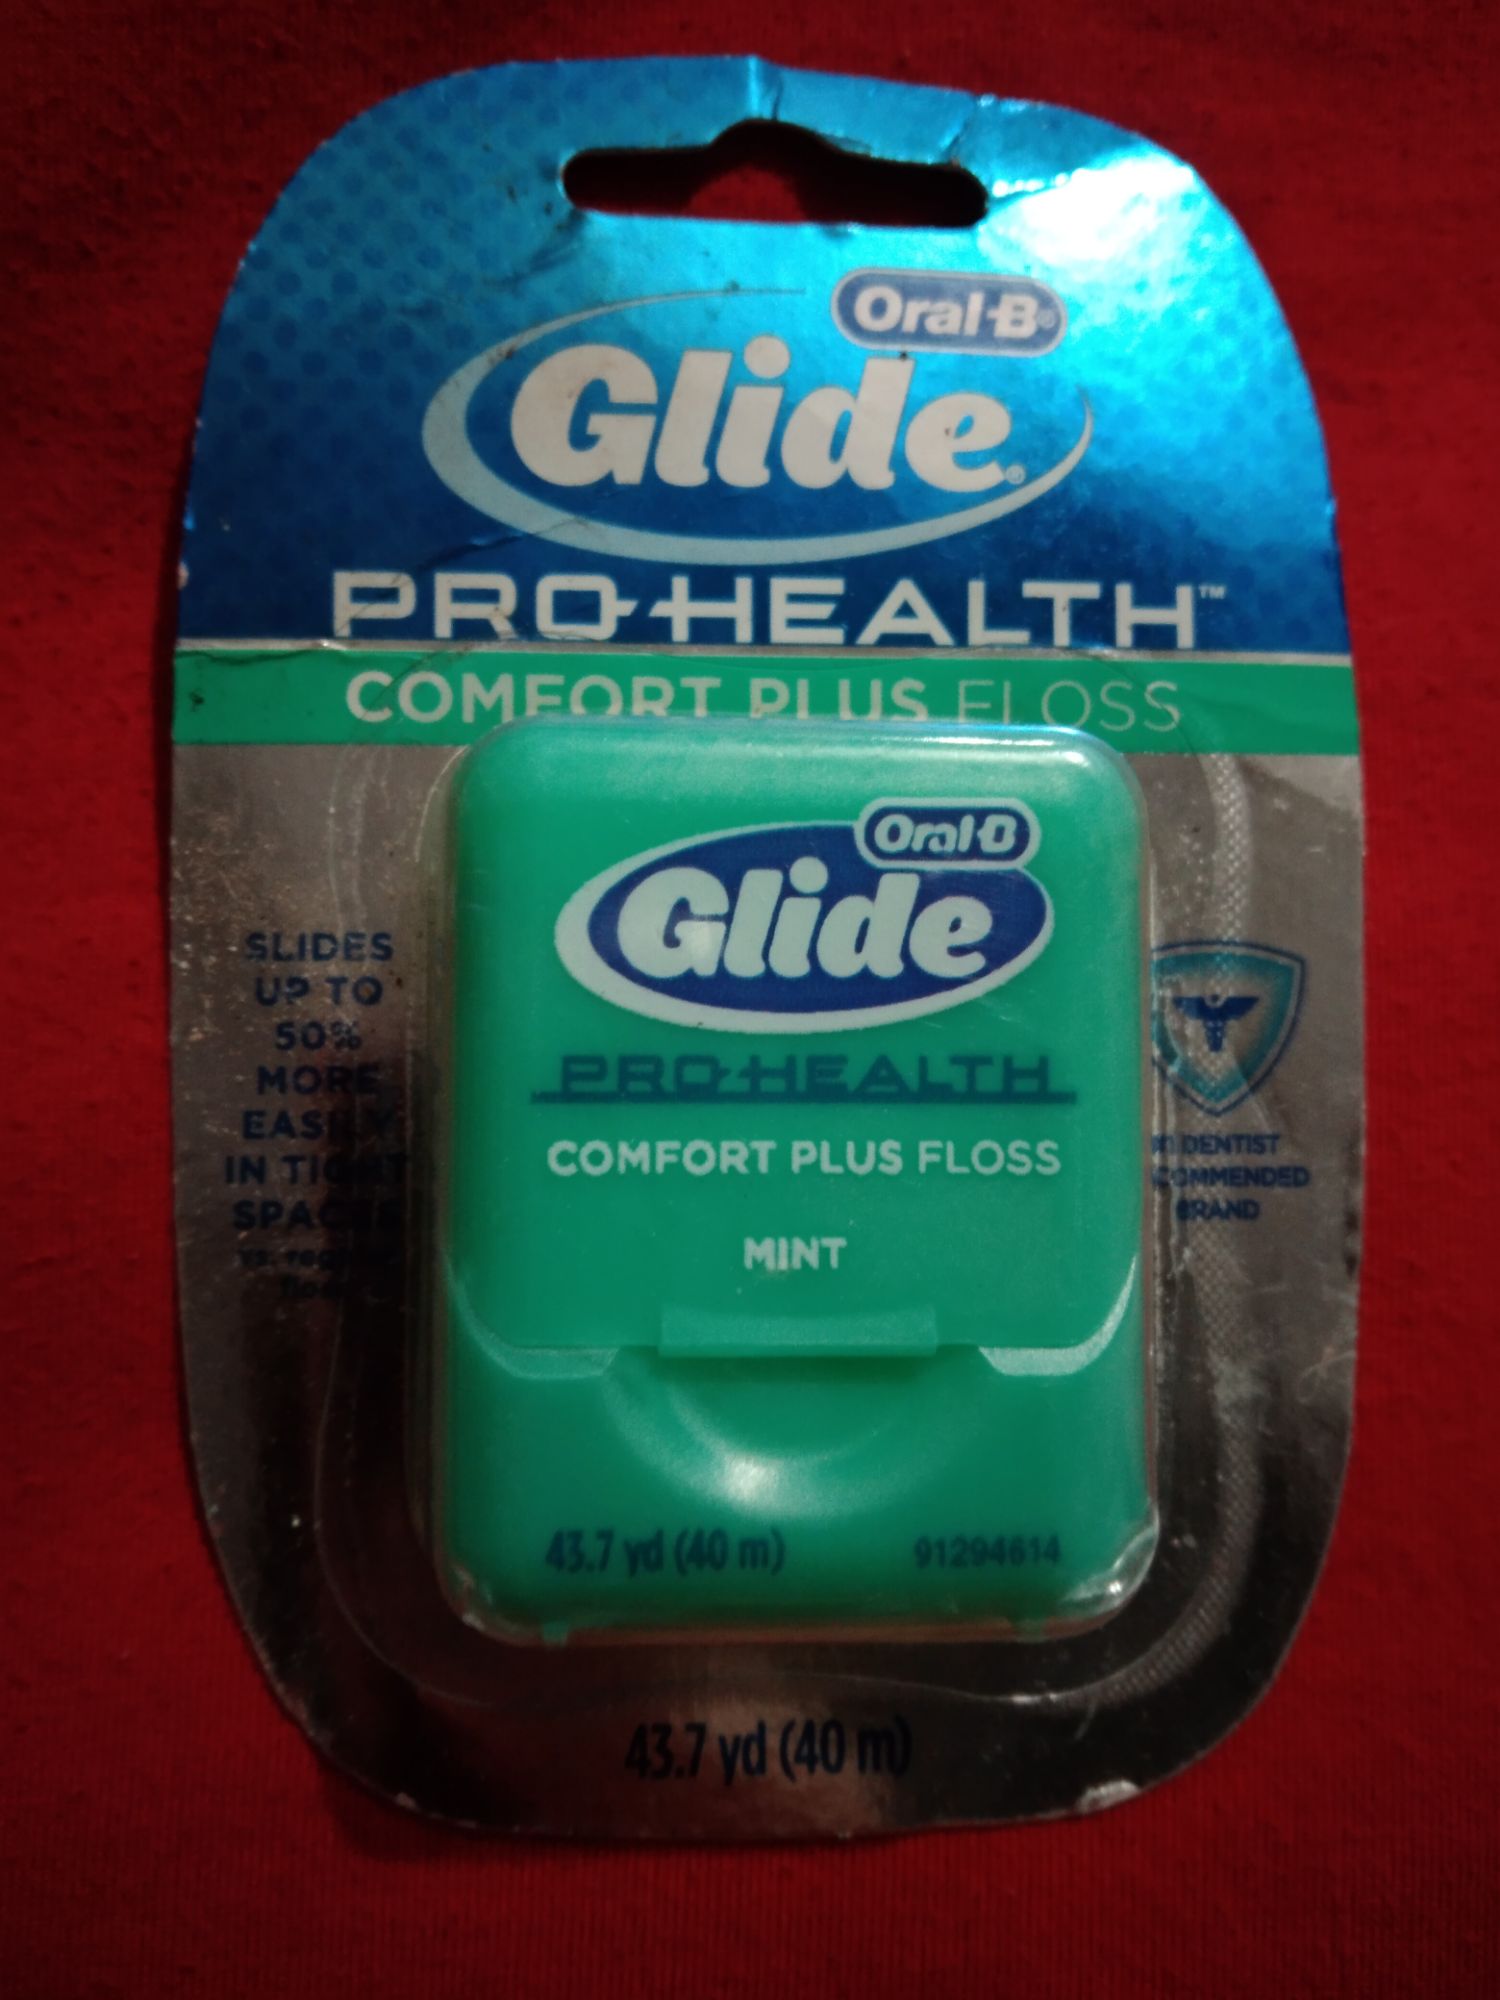 Oral-B Glide Pro-Health Comfort Plus Floss